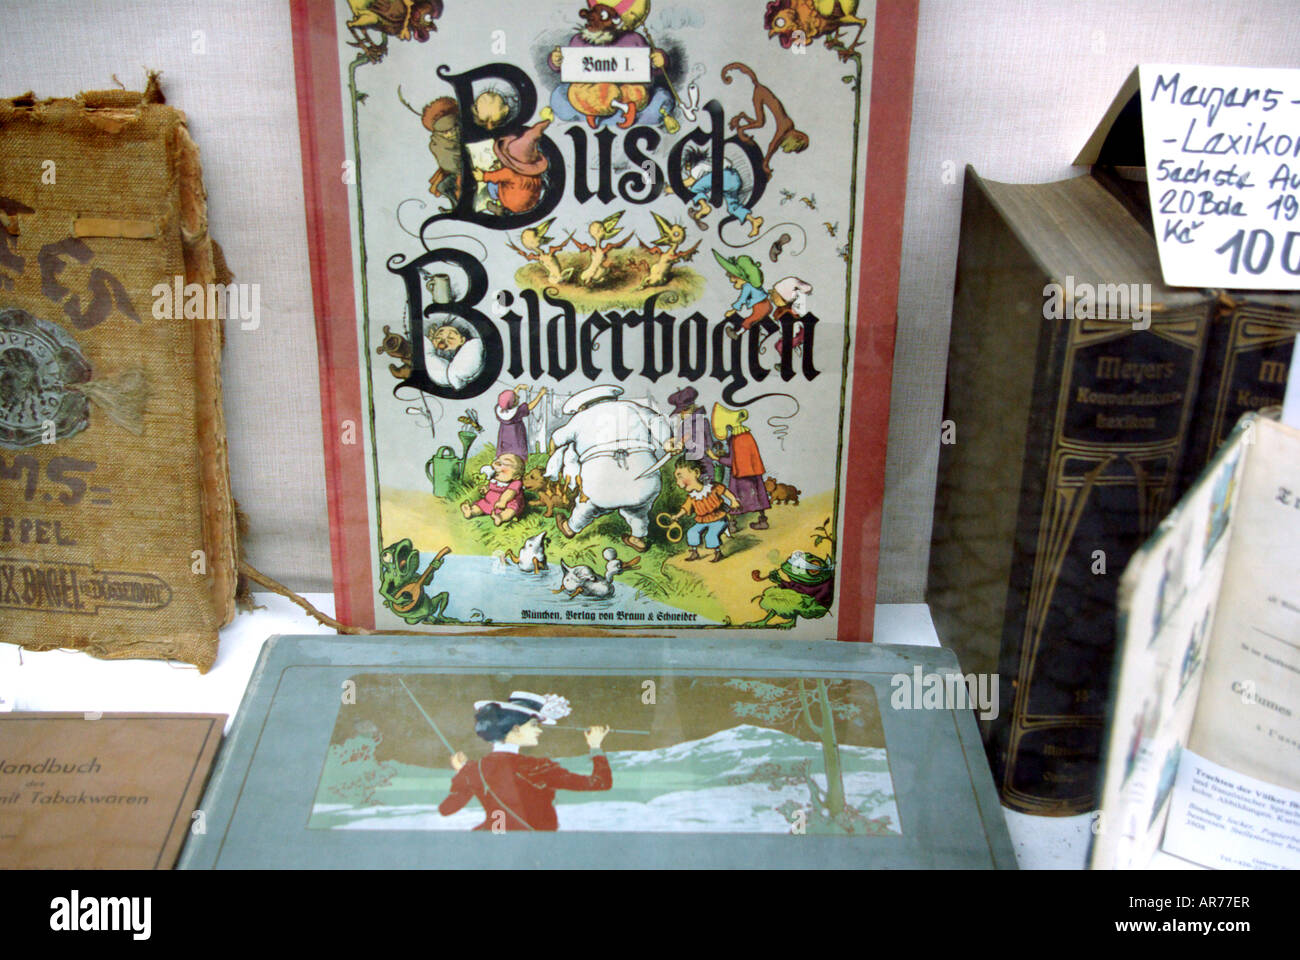 Window display at antiquarian bookshop in Stare Mesto Display features Busch Bilderbogen (sheet of pictures). Stock Photo